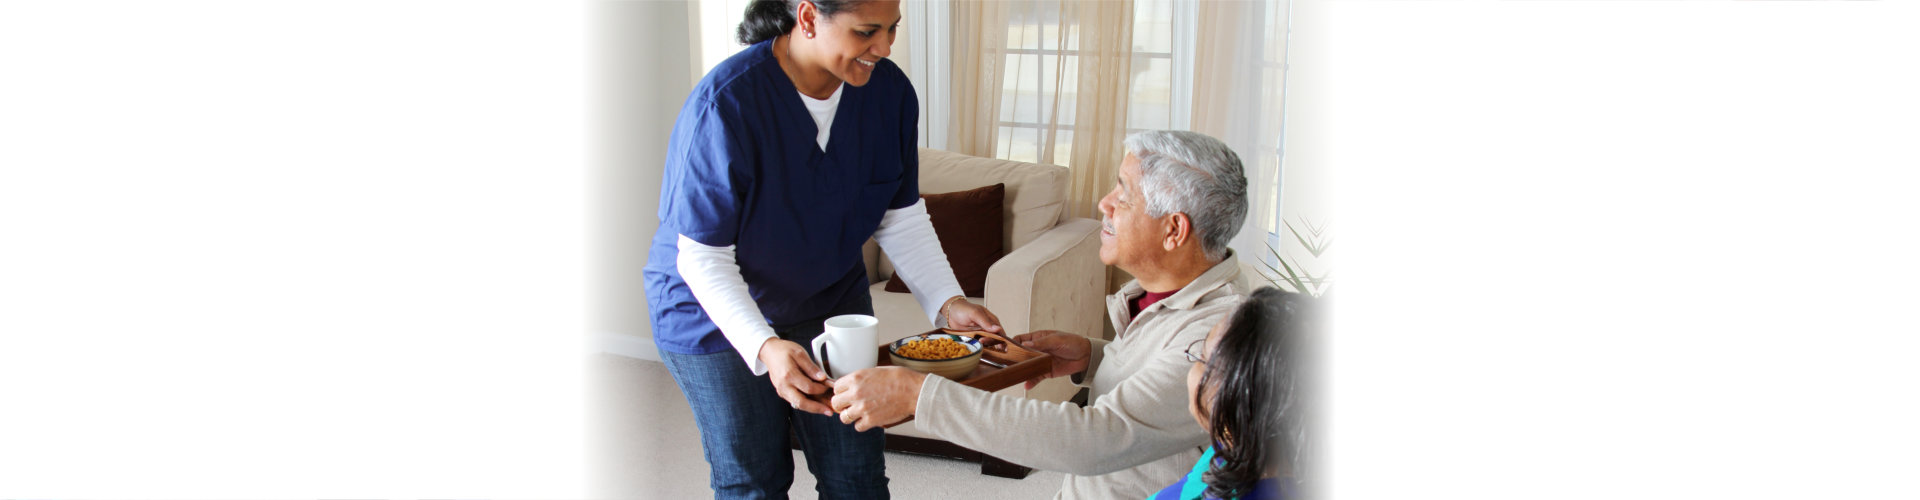 caregiver serving food to elderly couple